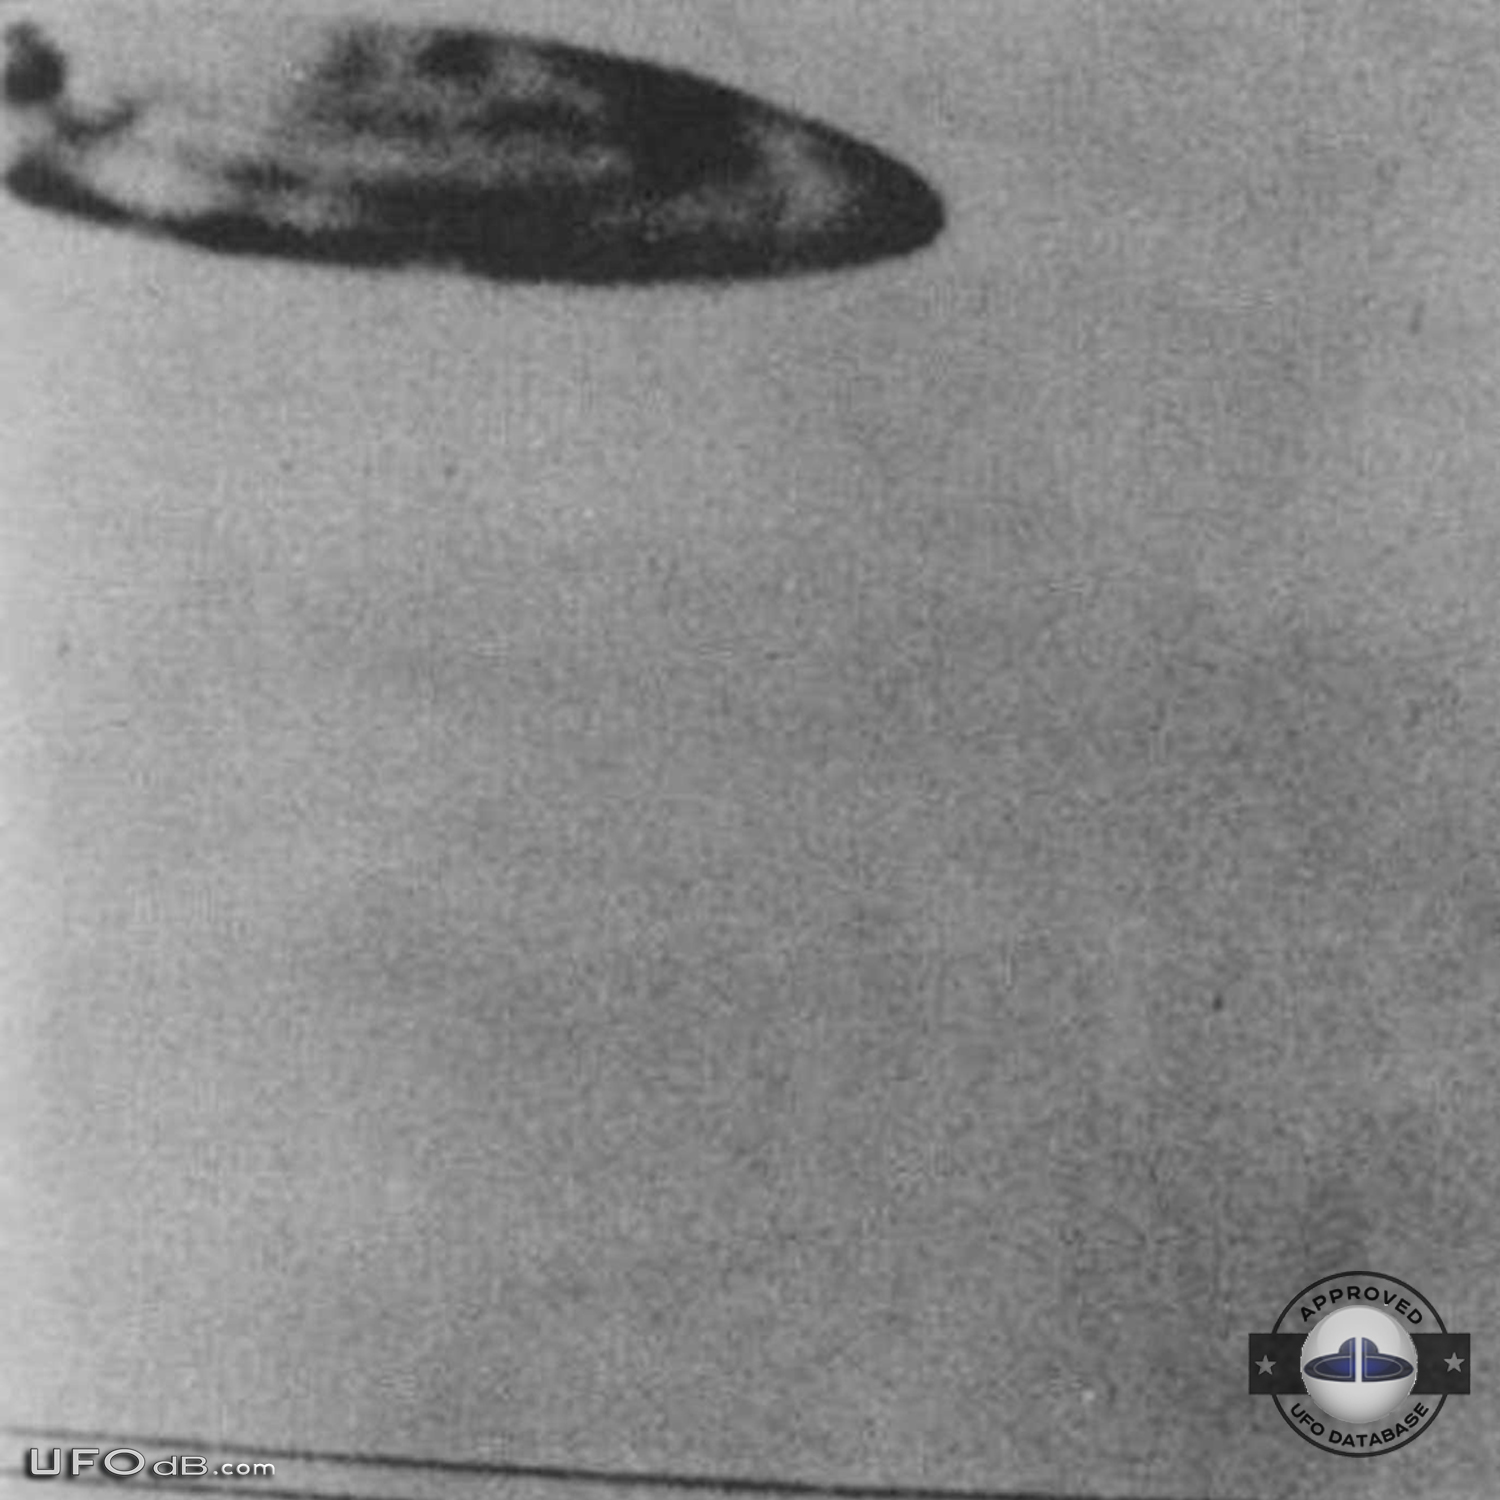 1950 Saucer UFO San Bernardino California USA caught on picture UFO Picture #433-2